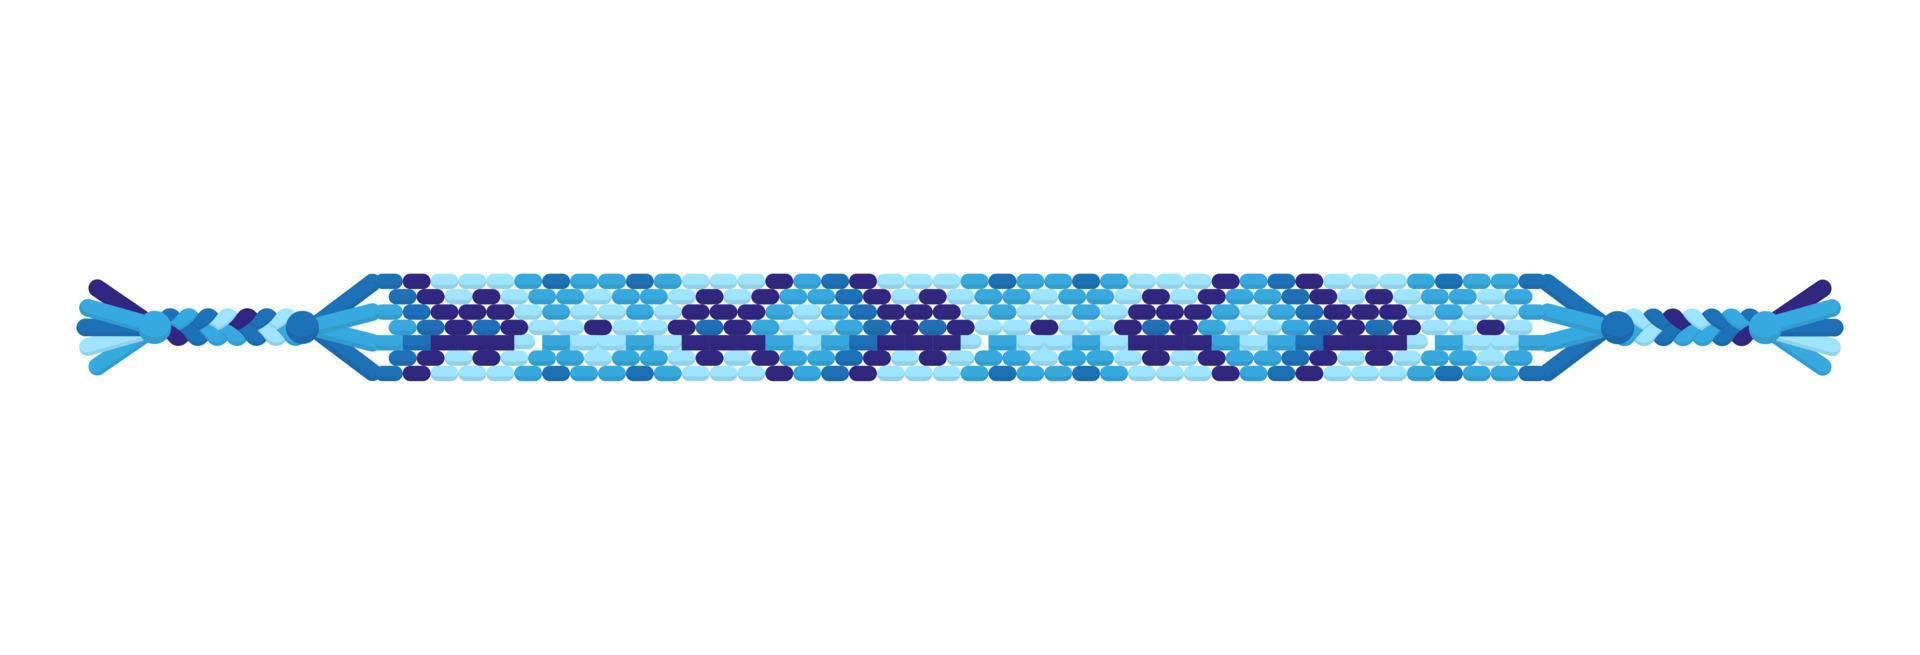 Vector multicolored handmade hippie friendship bracelet of blue threads.